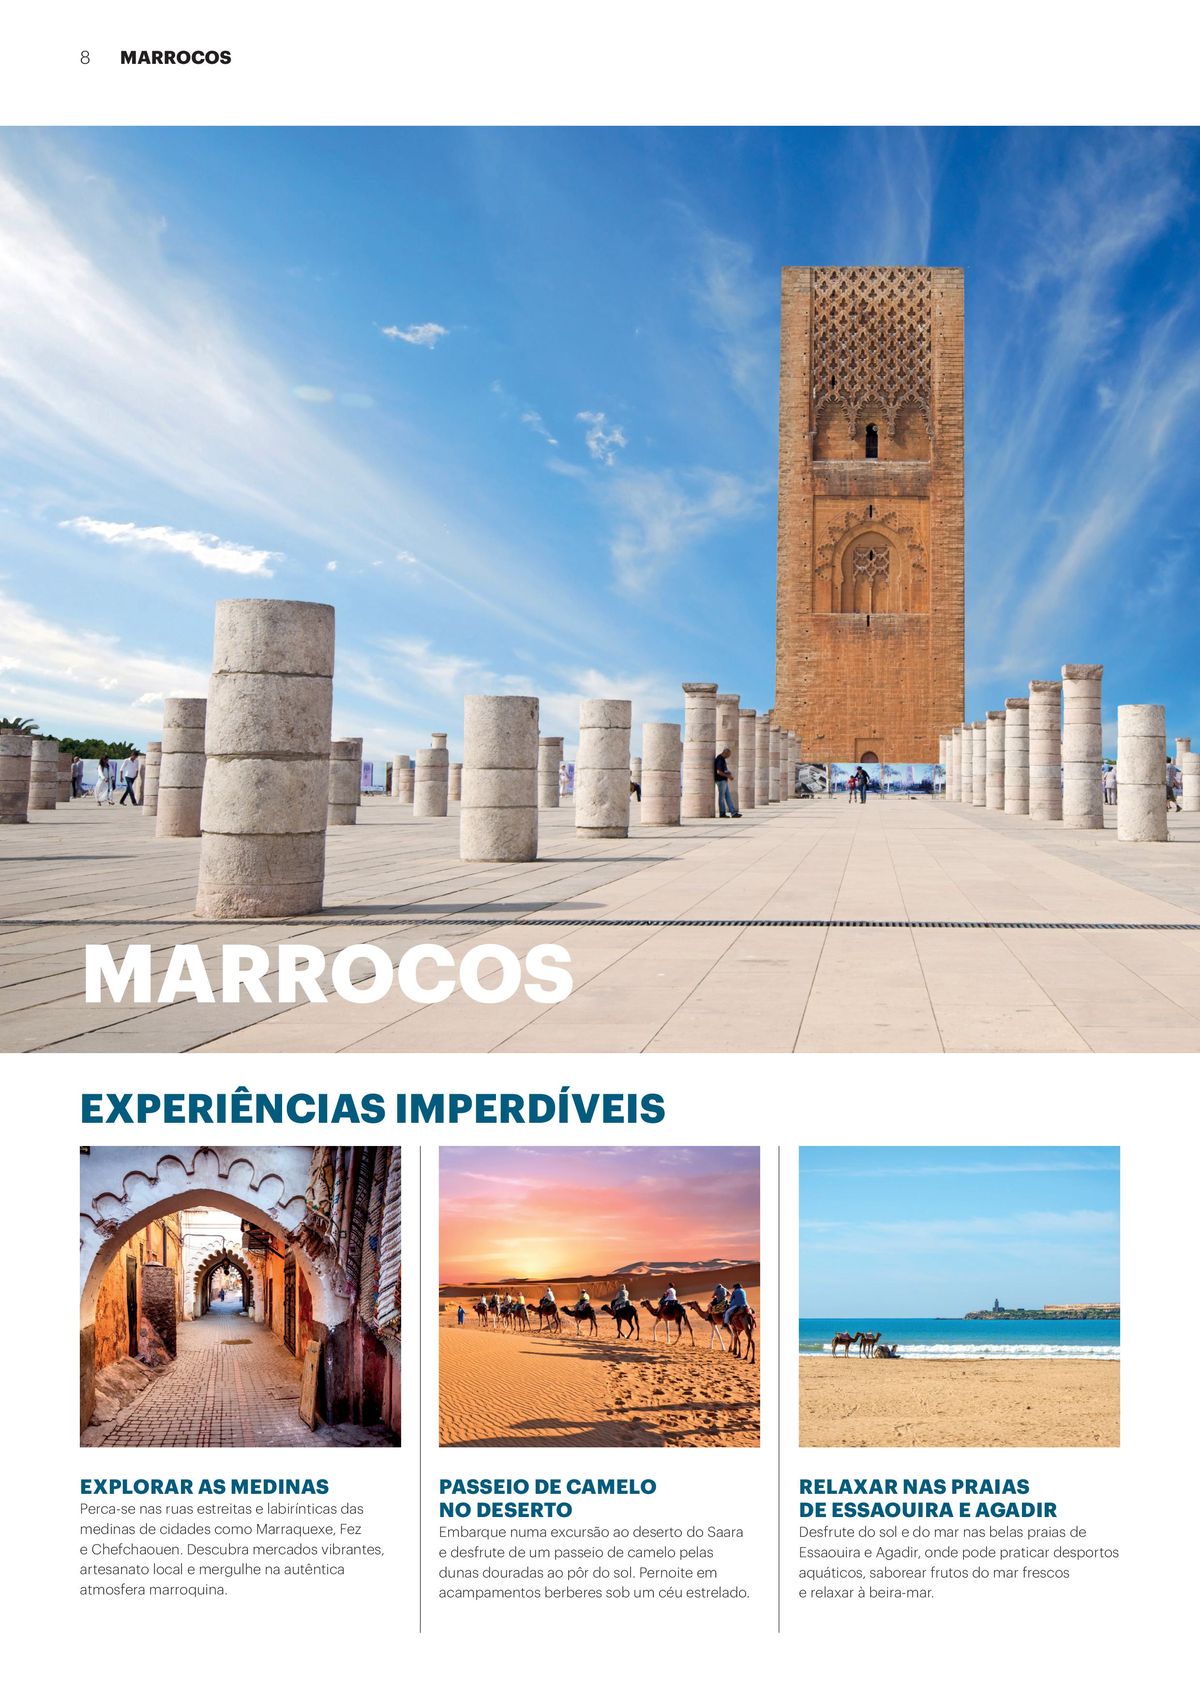 Explorar as medinas, passeio de camelo no deserto e relaxar nas praias de Essaouira e Agadir